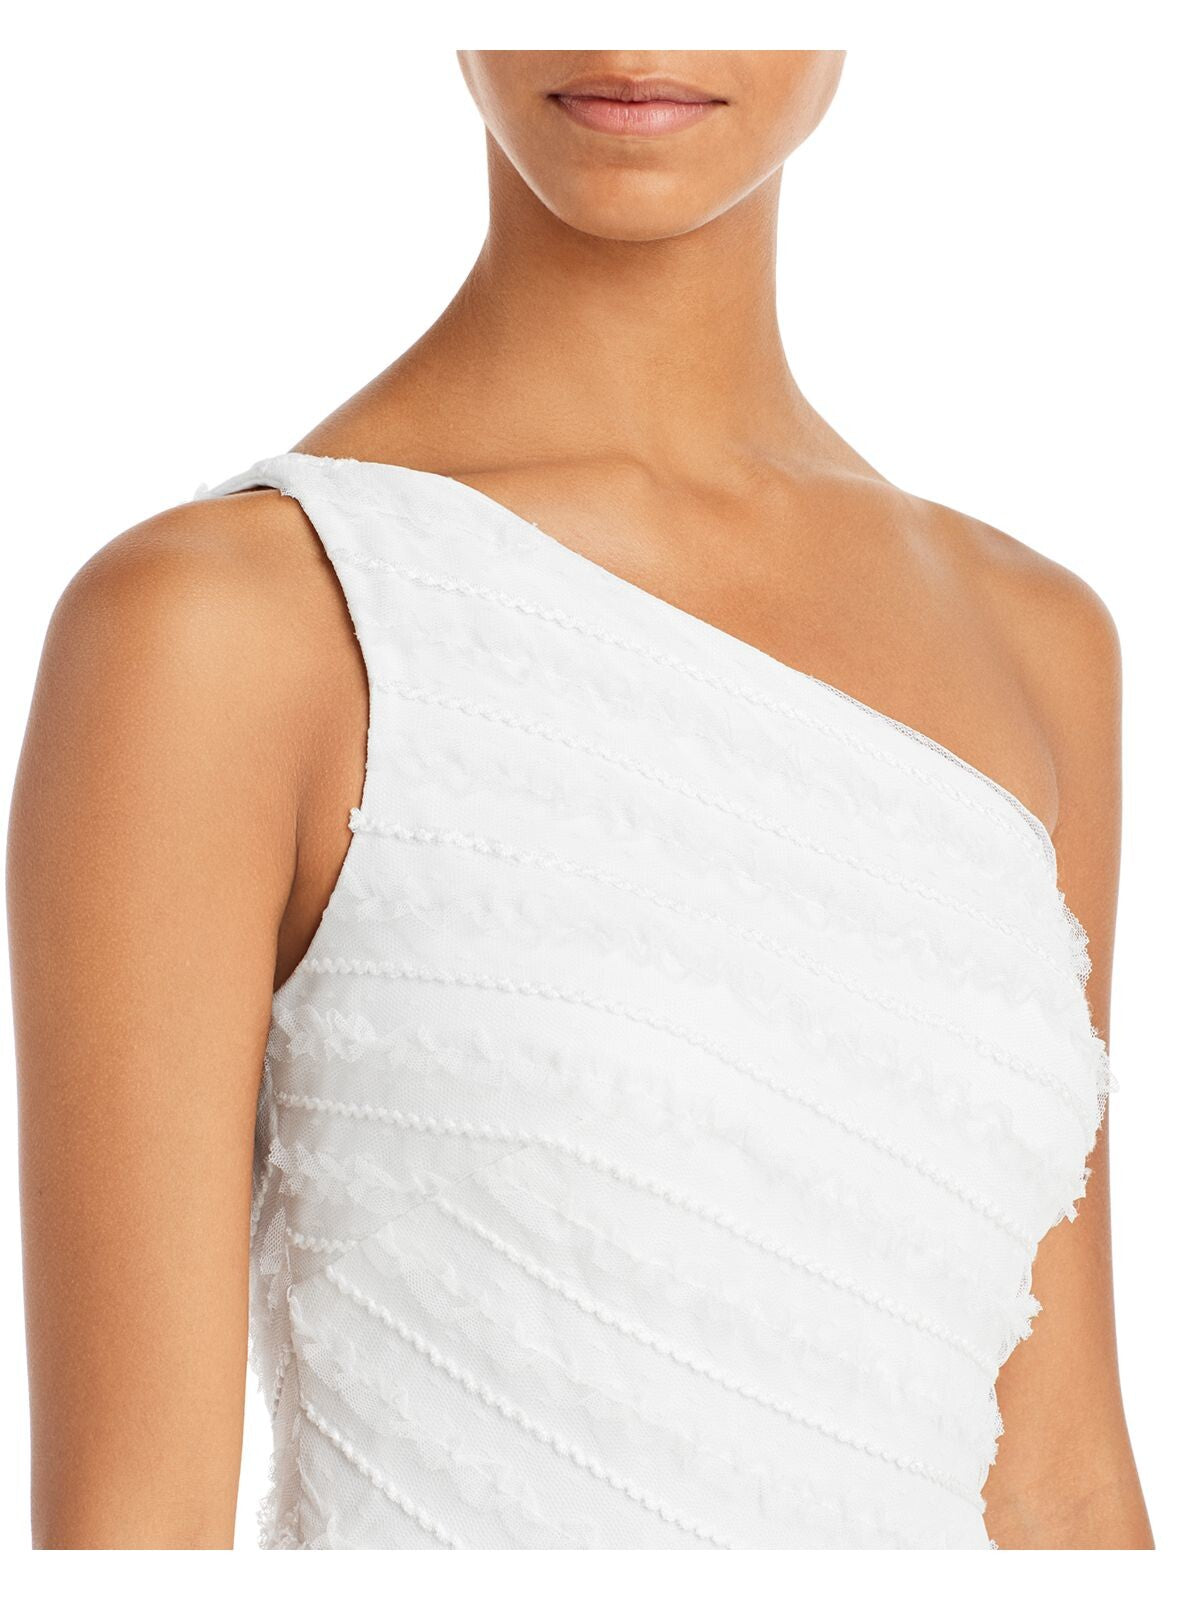 AQUA FORMAL Womens White Zippered Textured Mesh Overlay Lined Sleeveless Asymmetrical Neckline Midi Evening Fit + Flare Dress 4